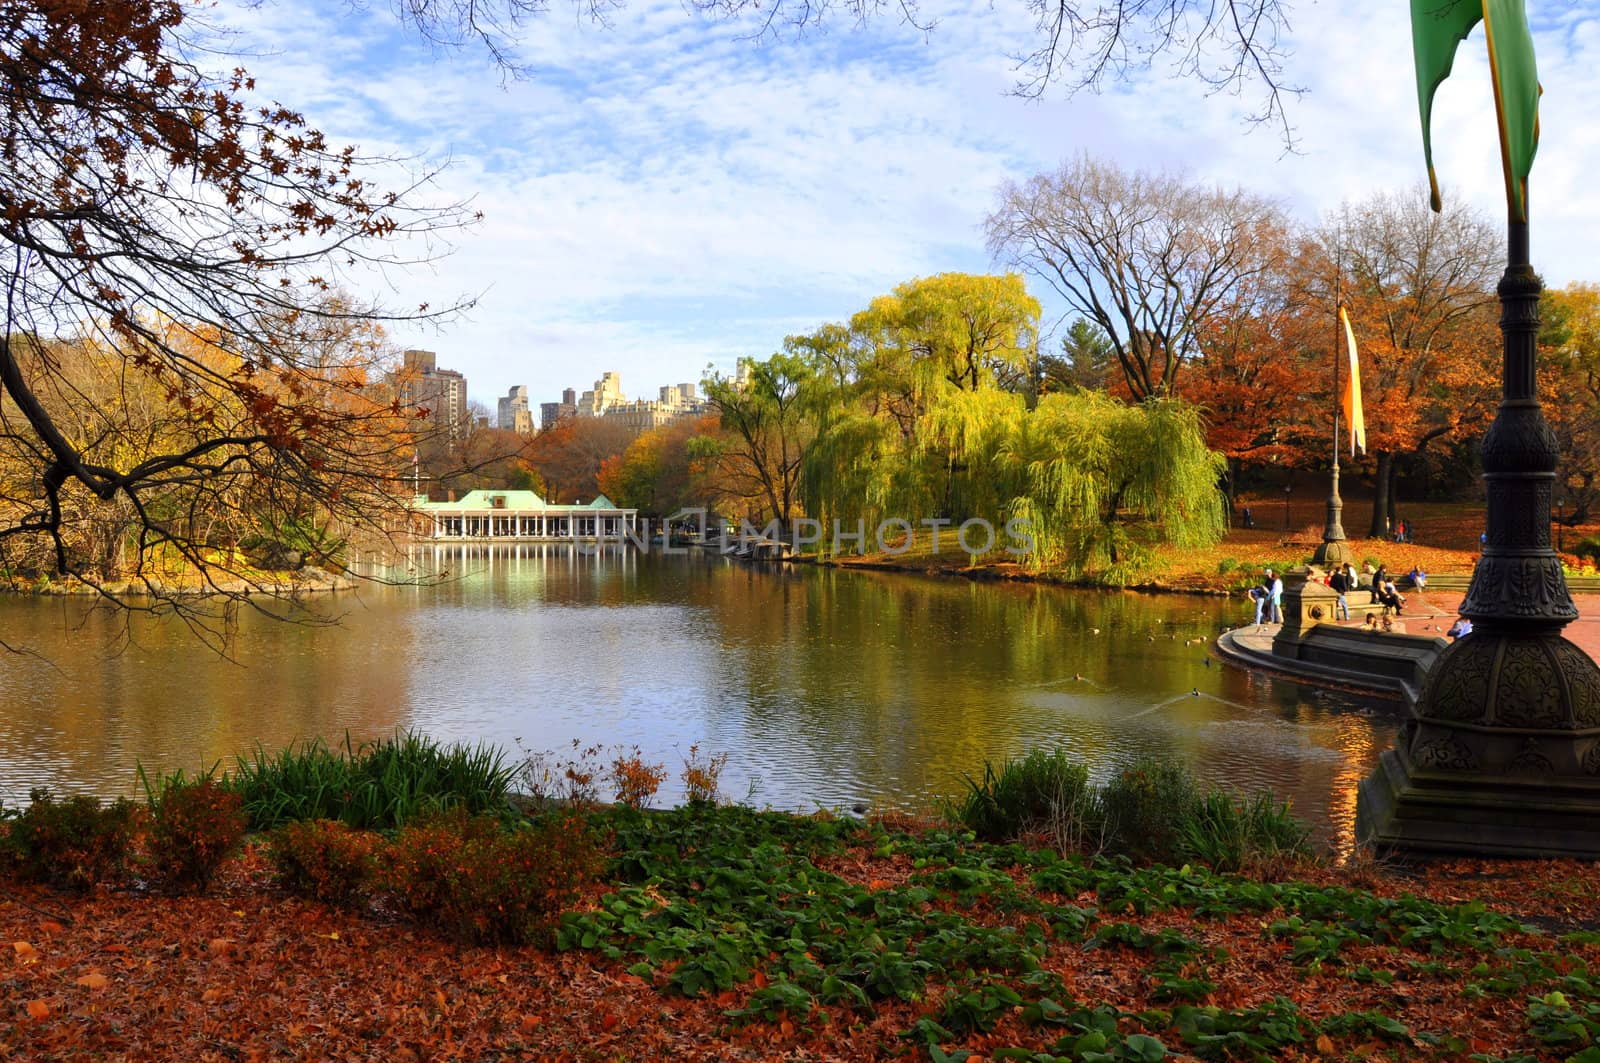 The lake in Central Park, NY.